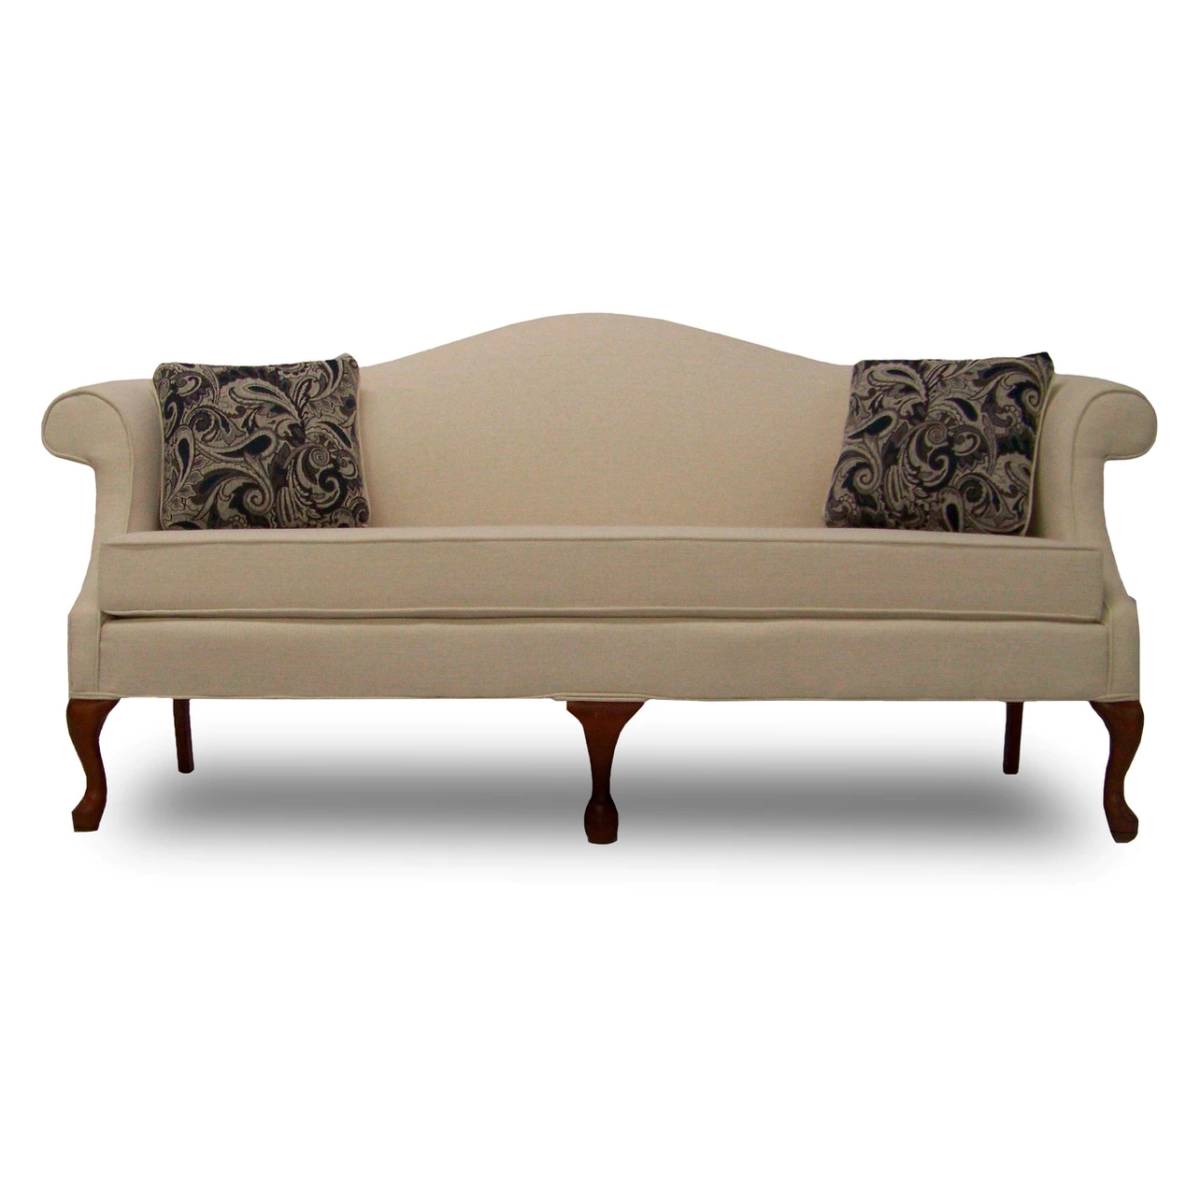 Queen Anne Sofa - Chippendale Furniture $1098